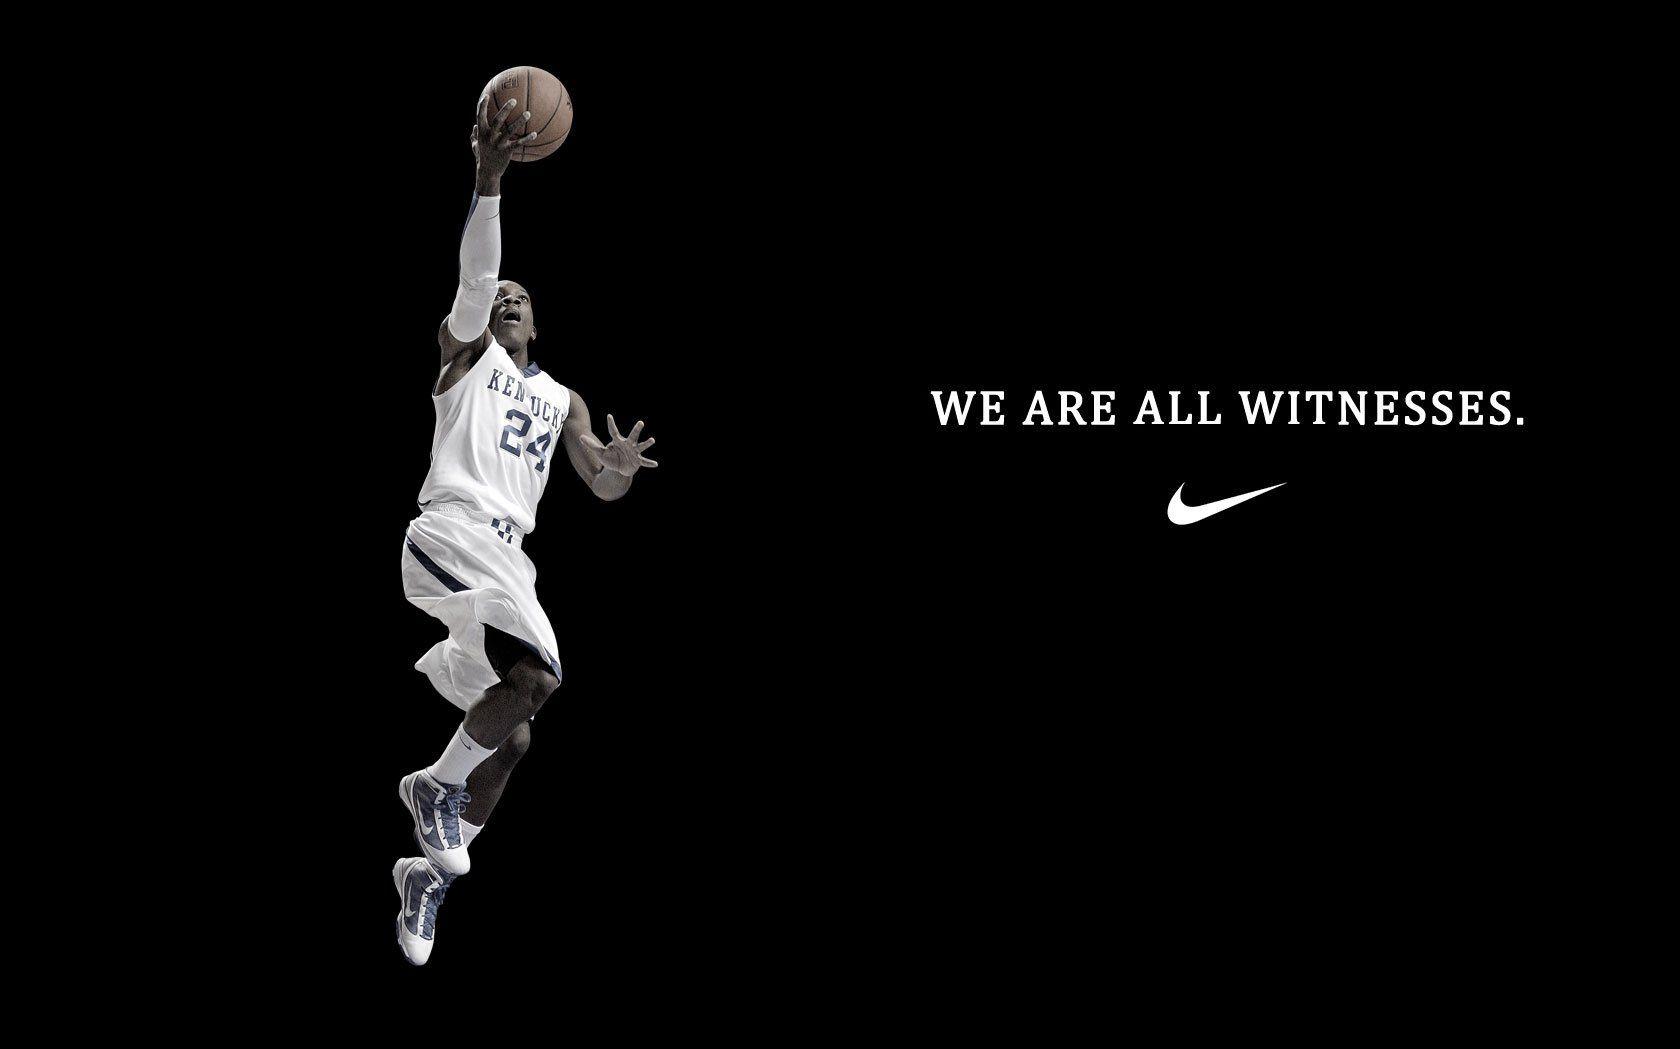 Nike Basketball Wallpaper For Your